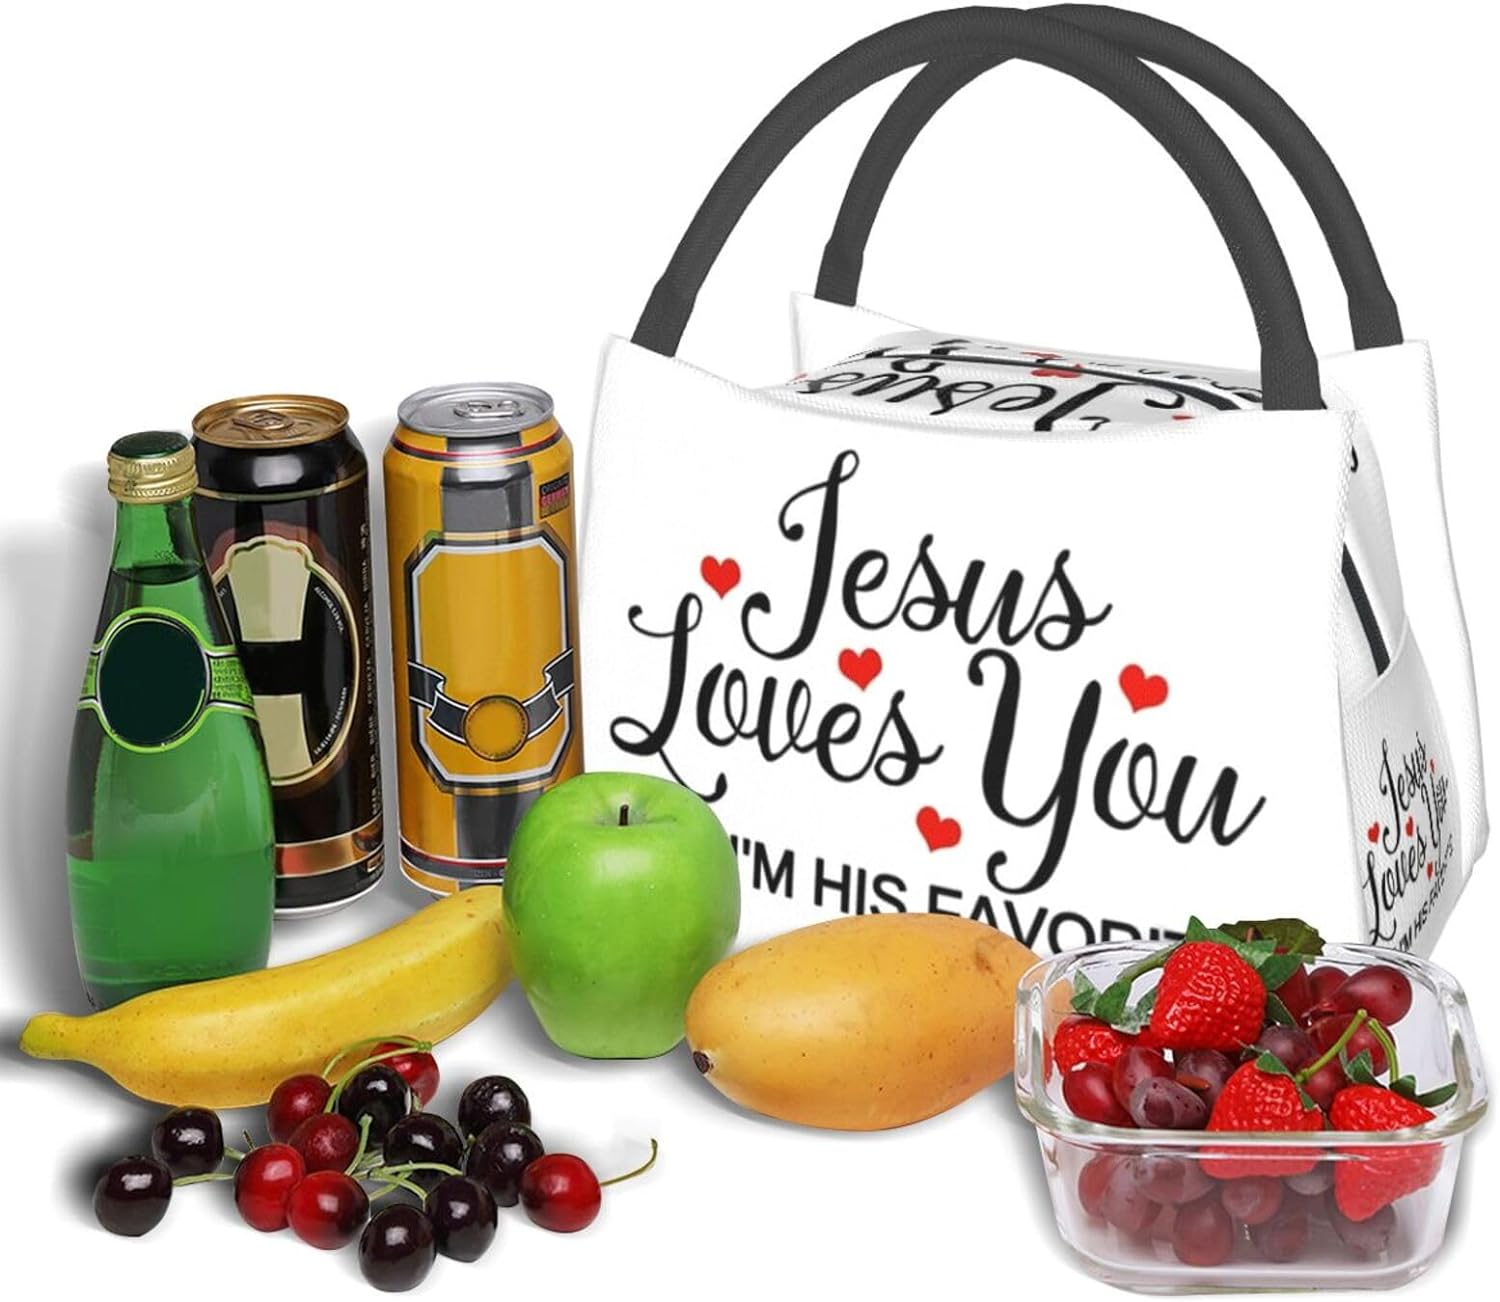 Jesus Loves You But I'm HIs Favorite Christian Lunch Bag claimedbygoddesigns